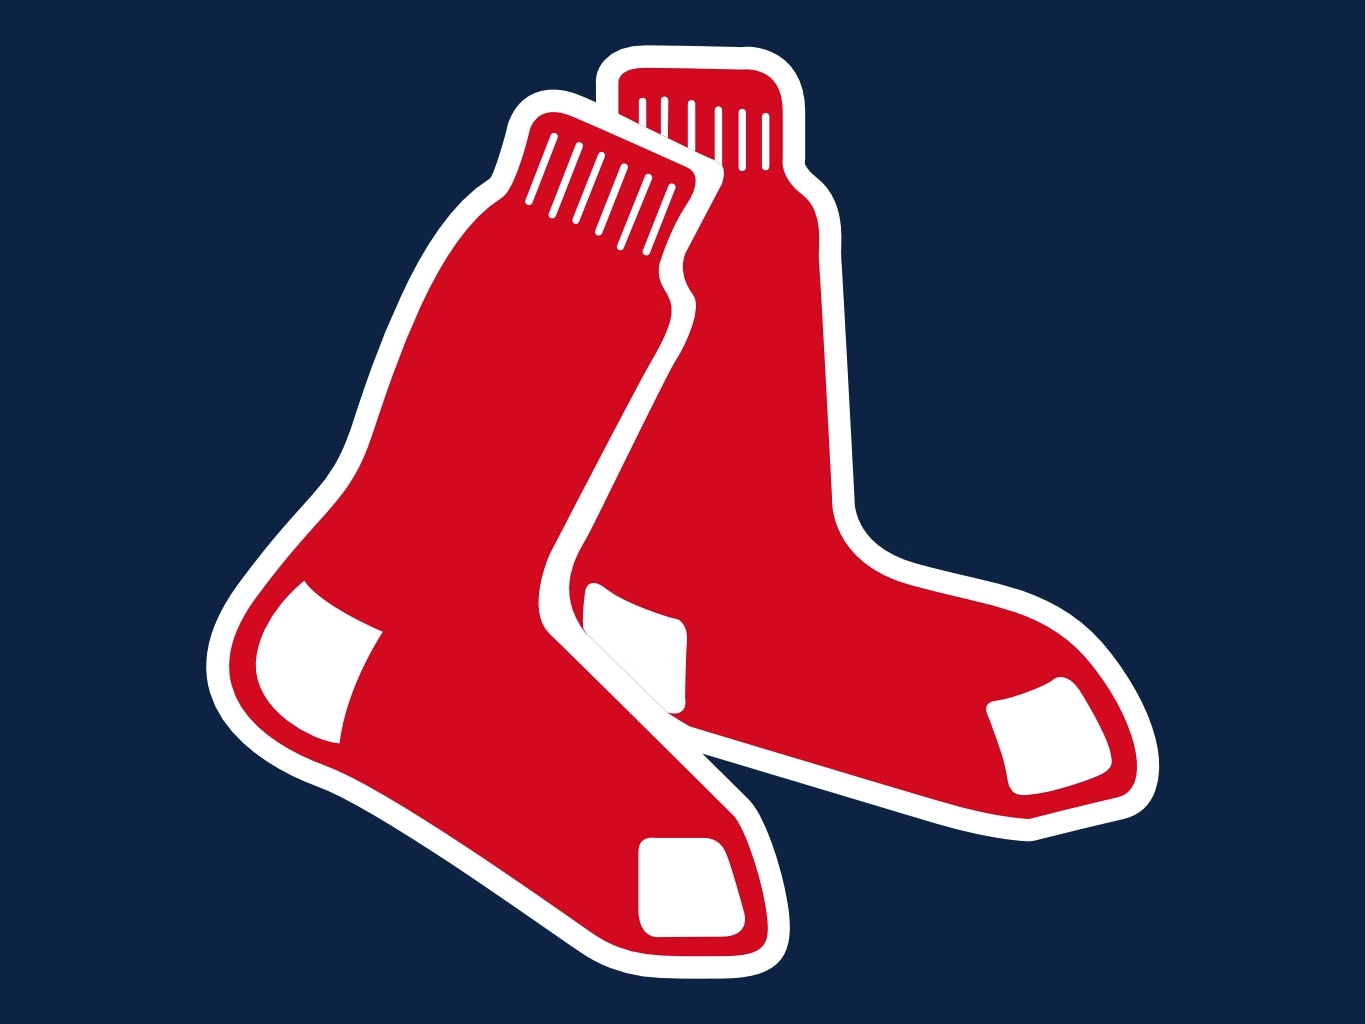 boston-red-sox-pro-sports-teams-wiki-fandom-powered-by-wikia